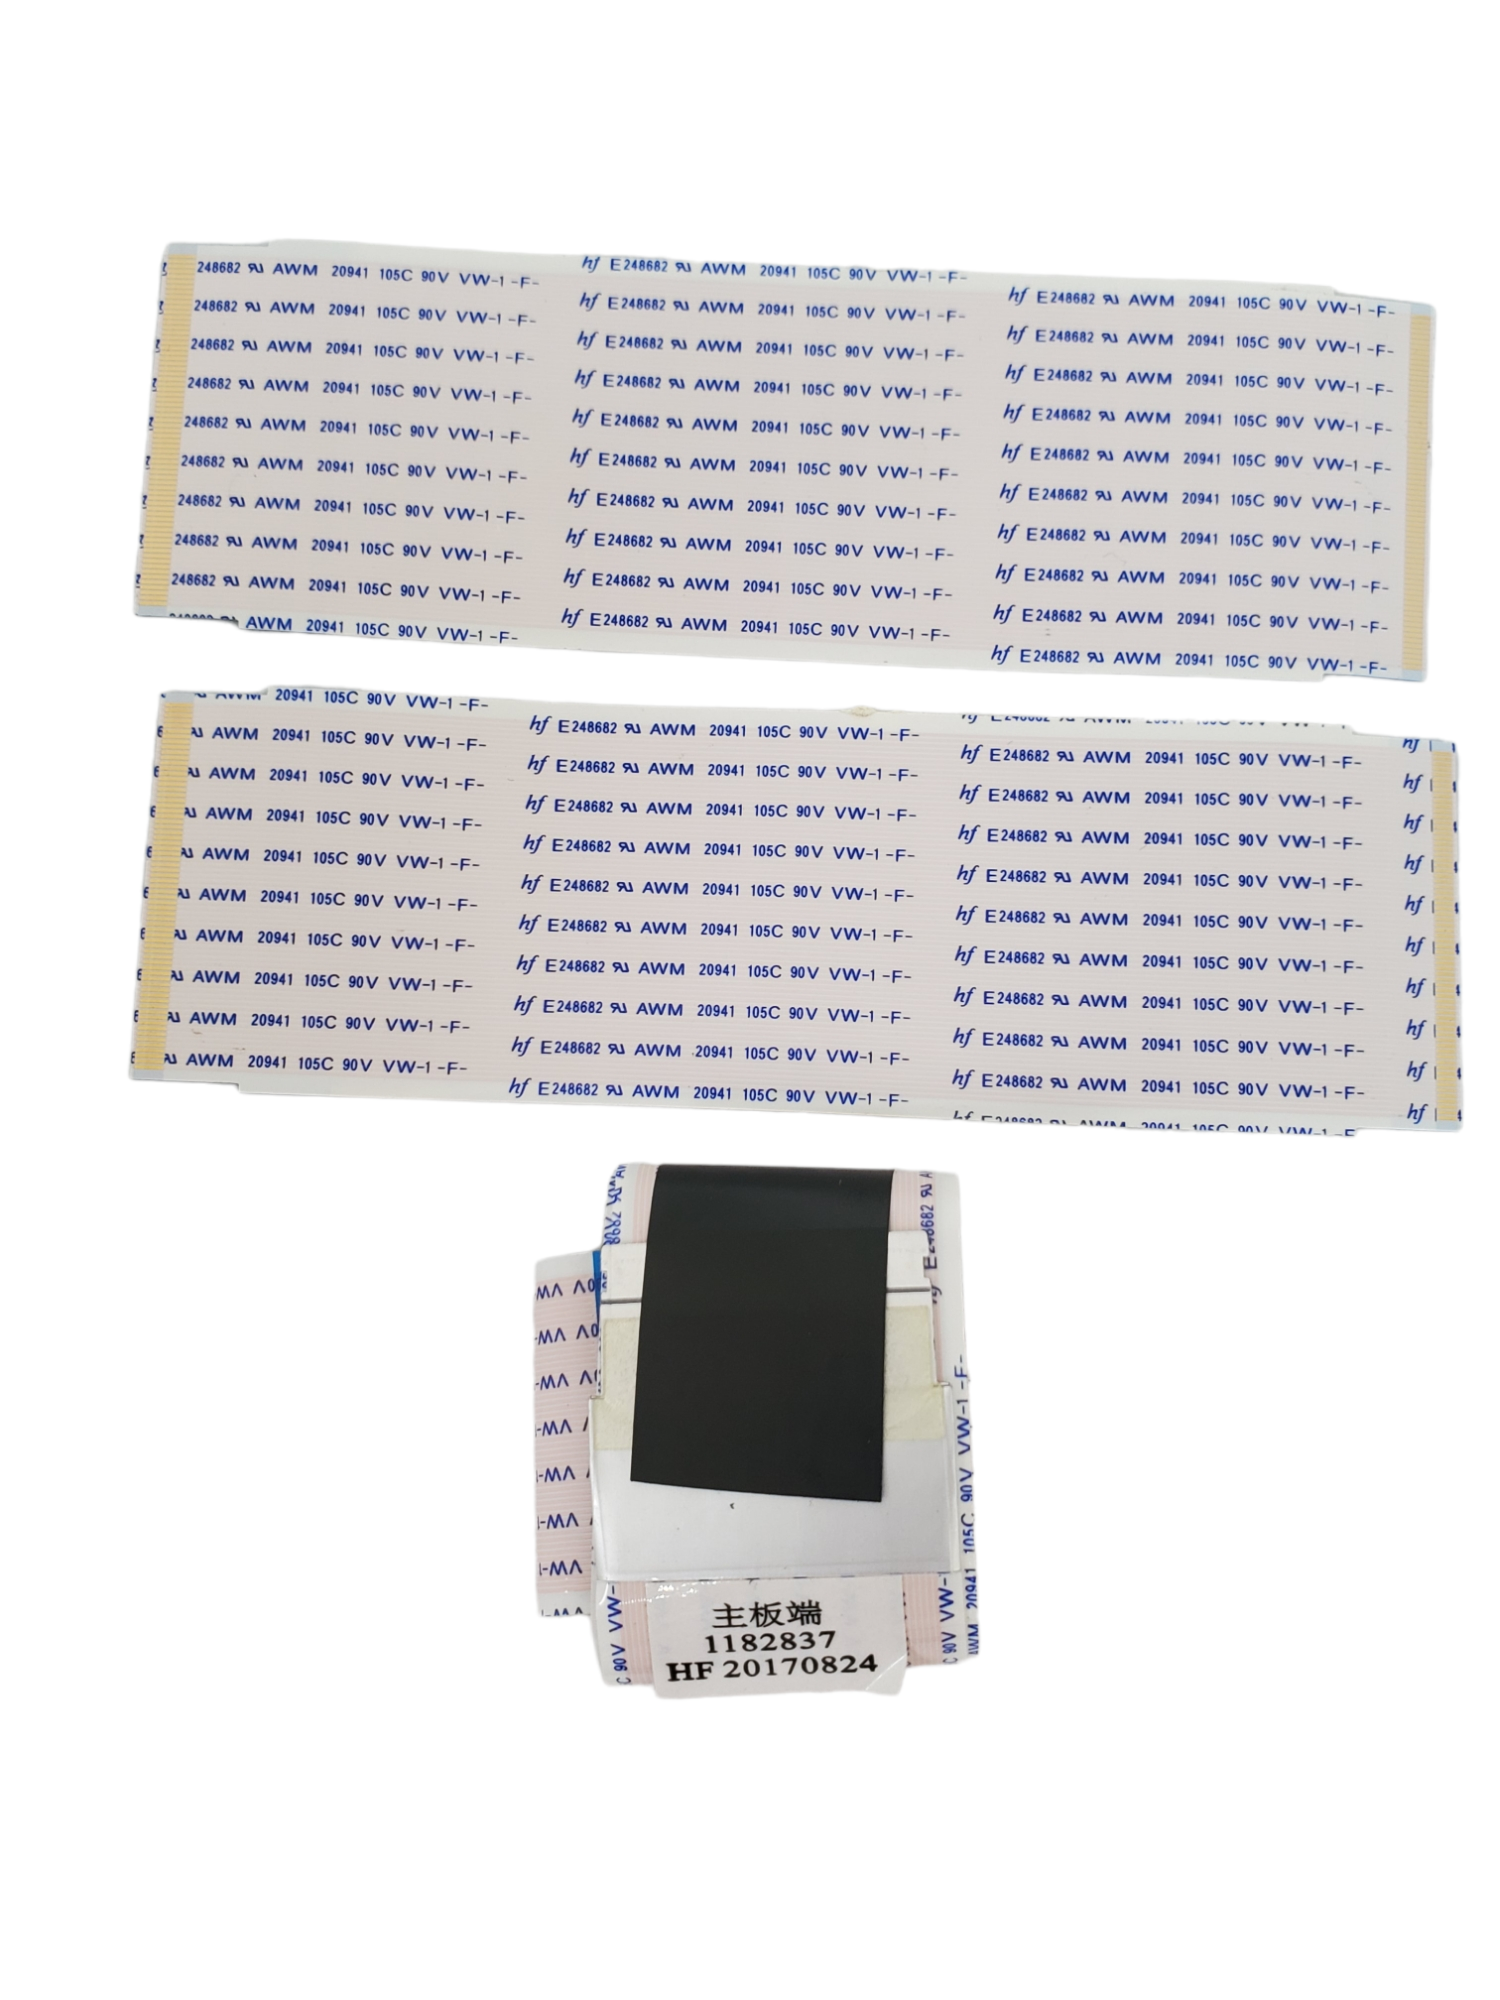 kit flexores, cable de alimentación, modulo de encendido/wifi y sensor infrarrojo Sharp LC65P6000D